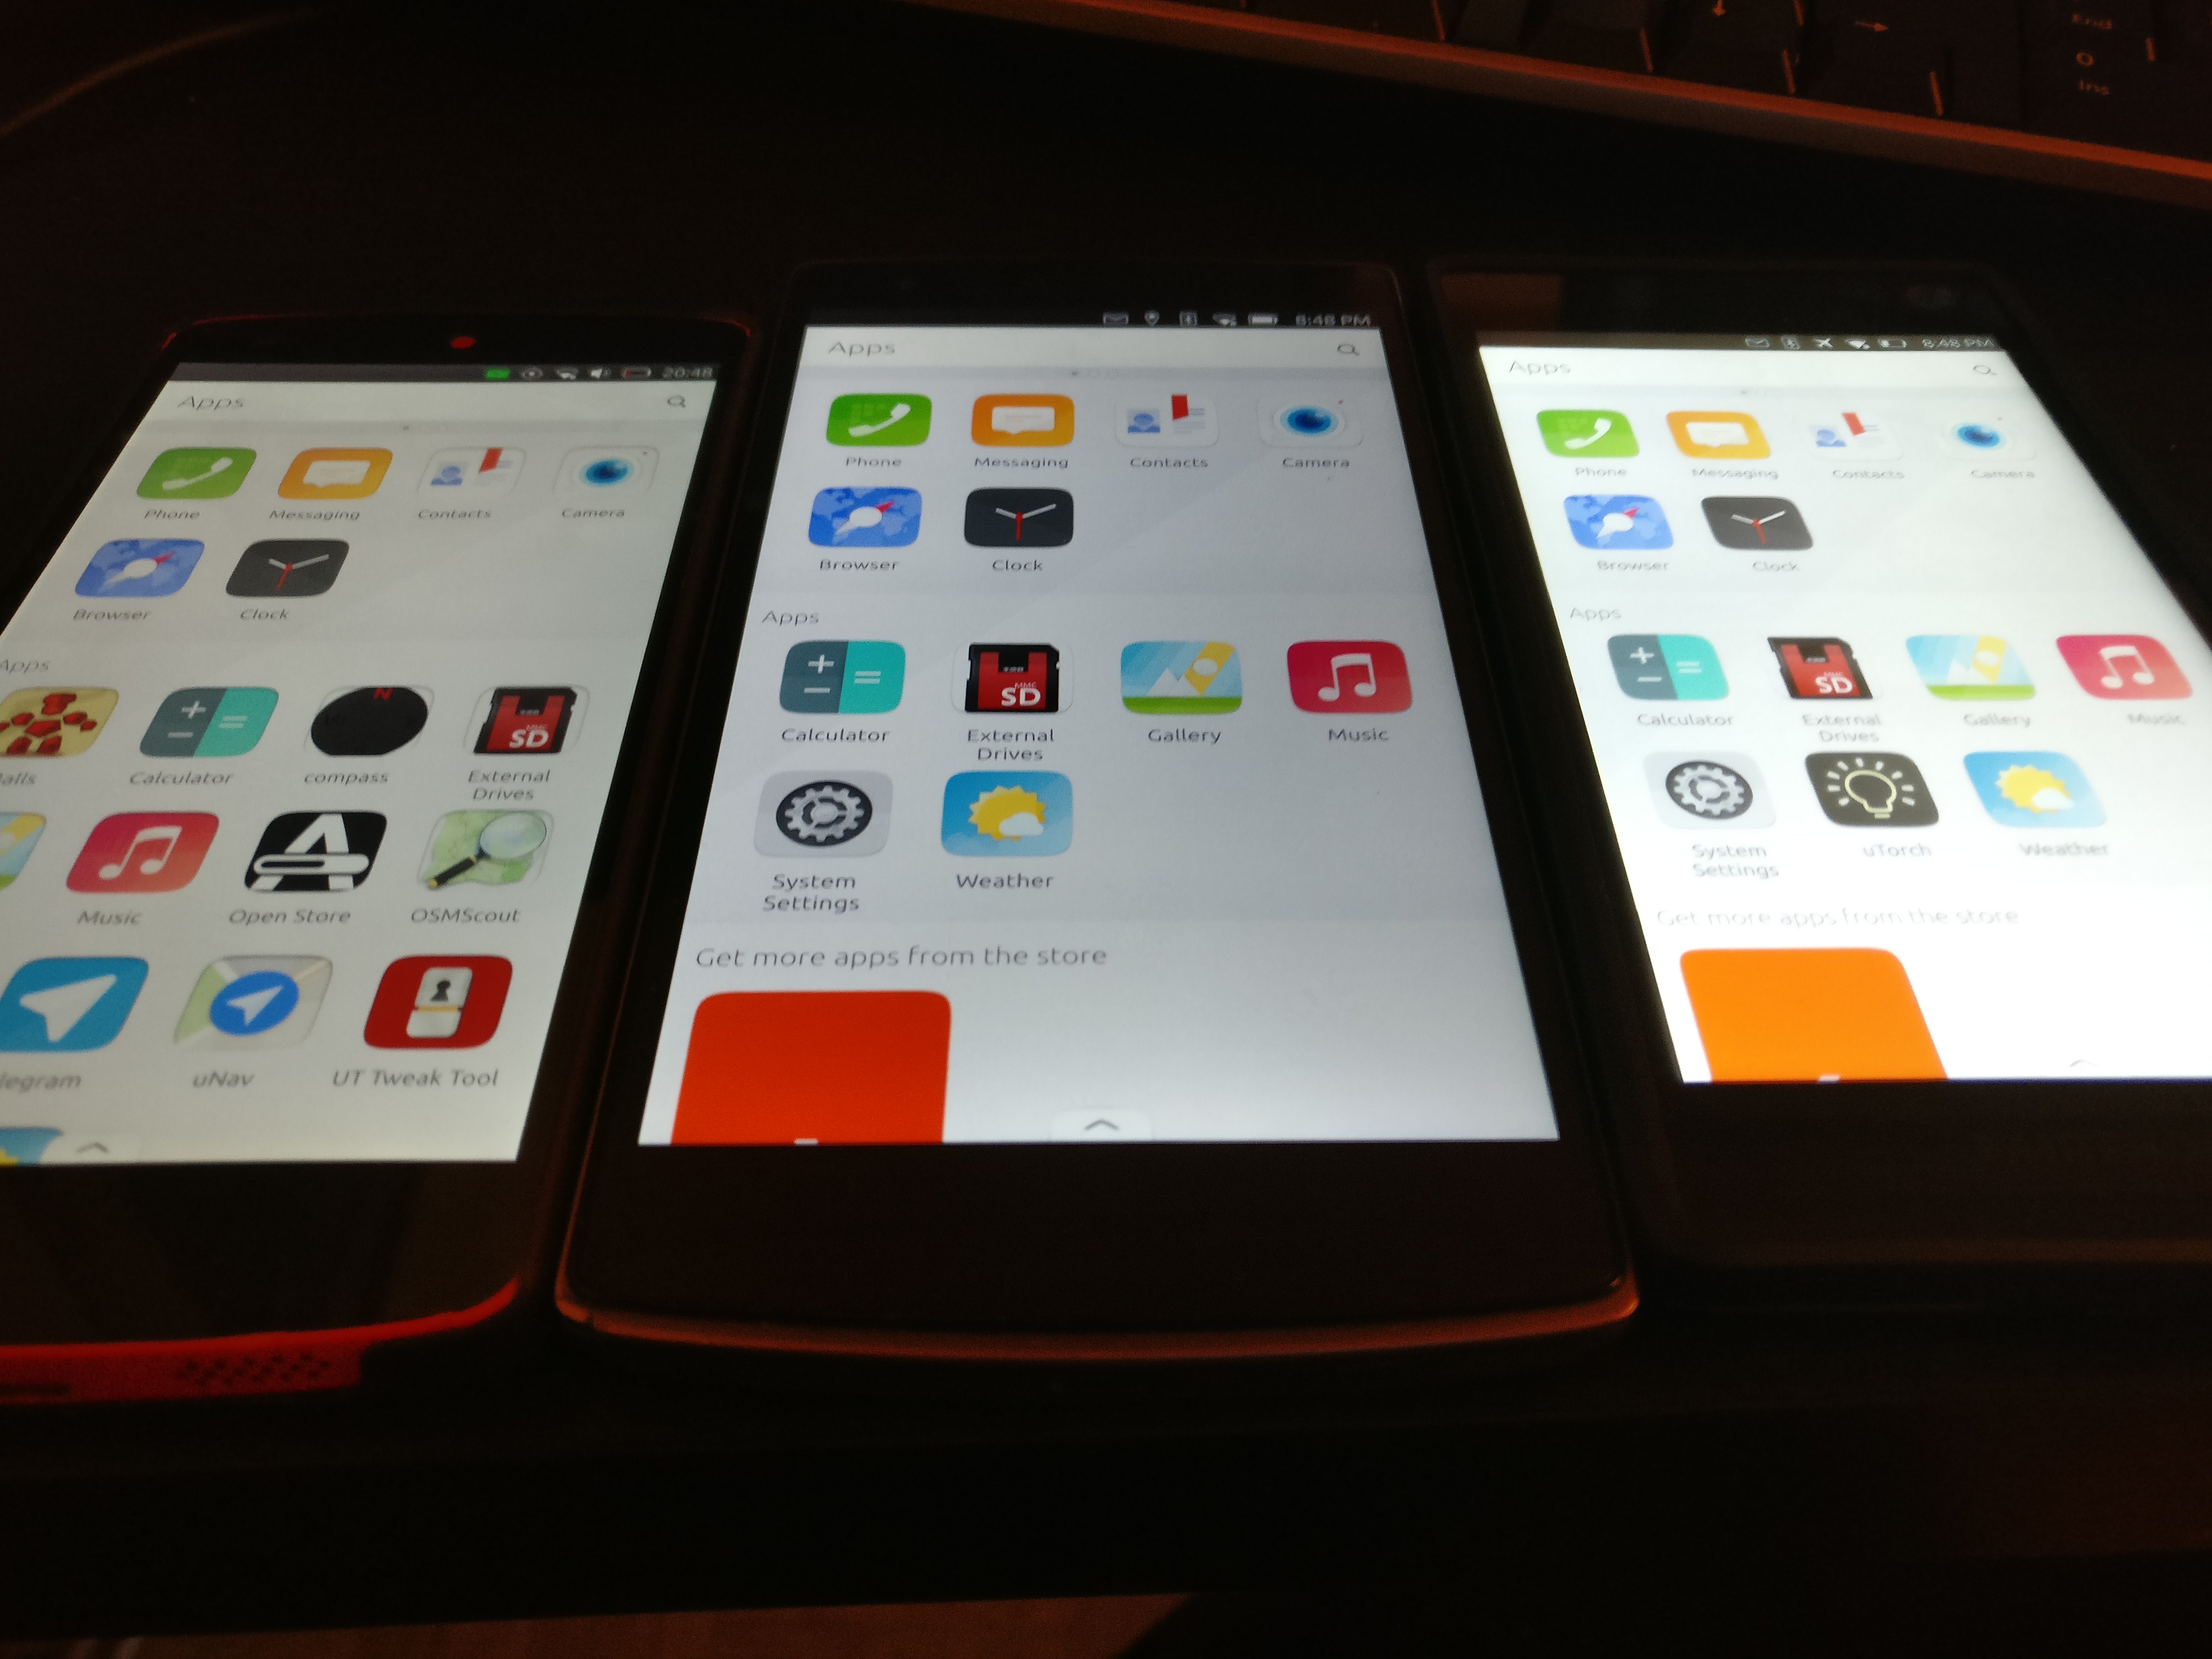 fairphone-2-and-oneplus-one-ubuntu-phone